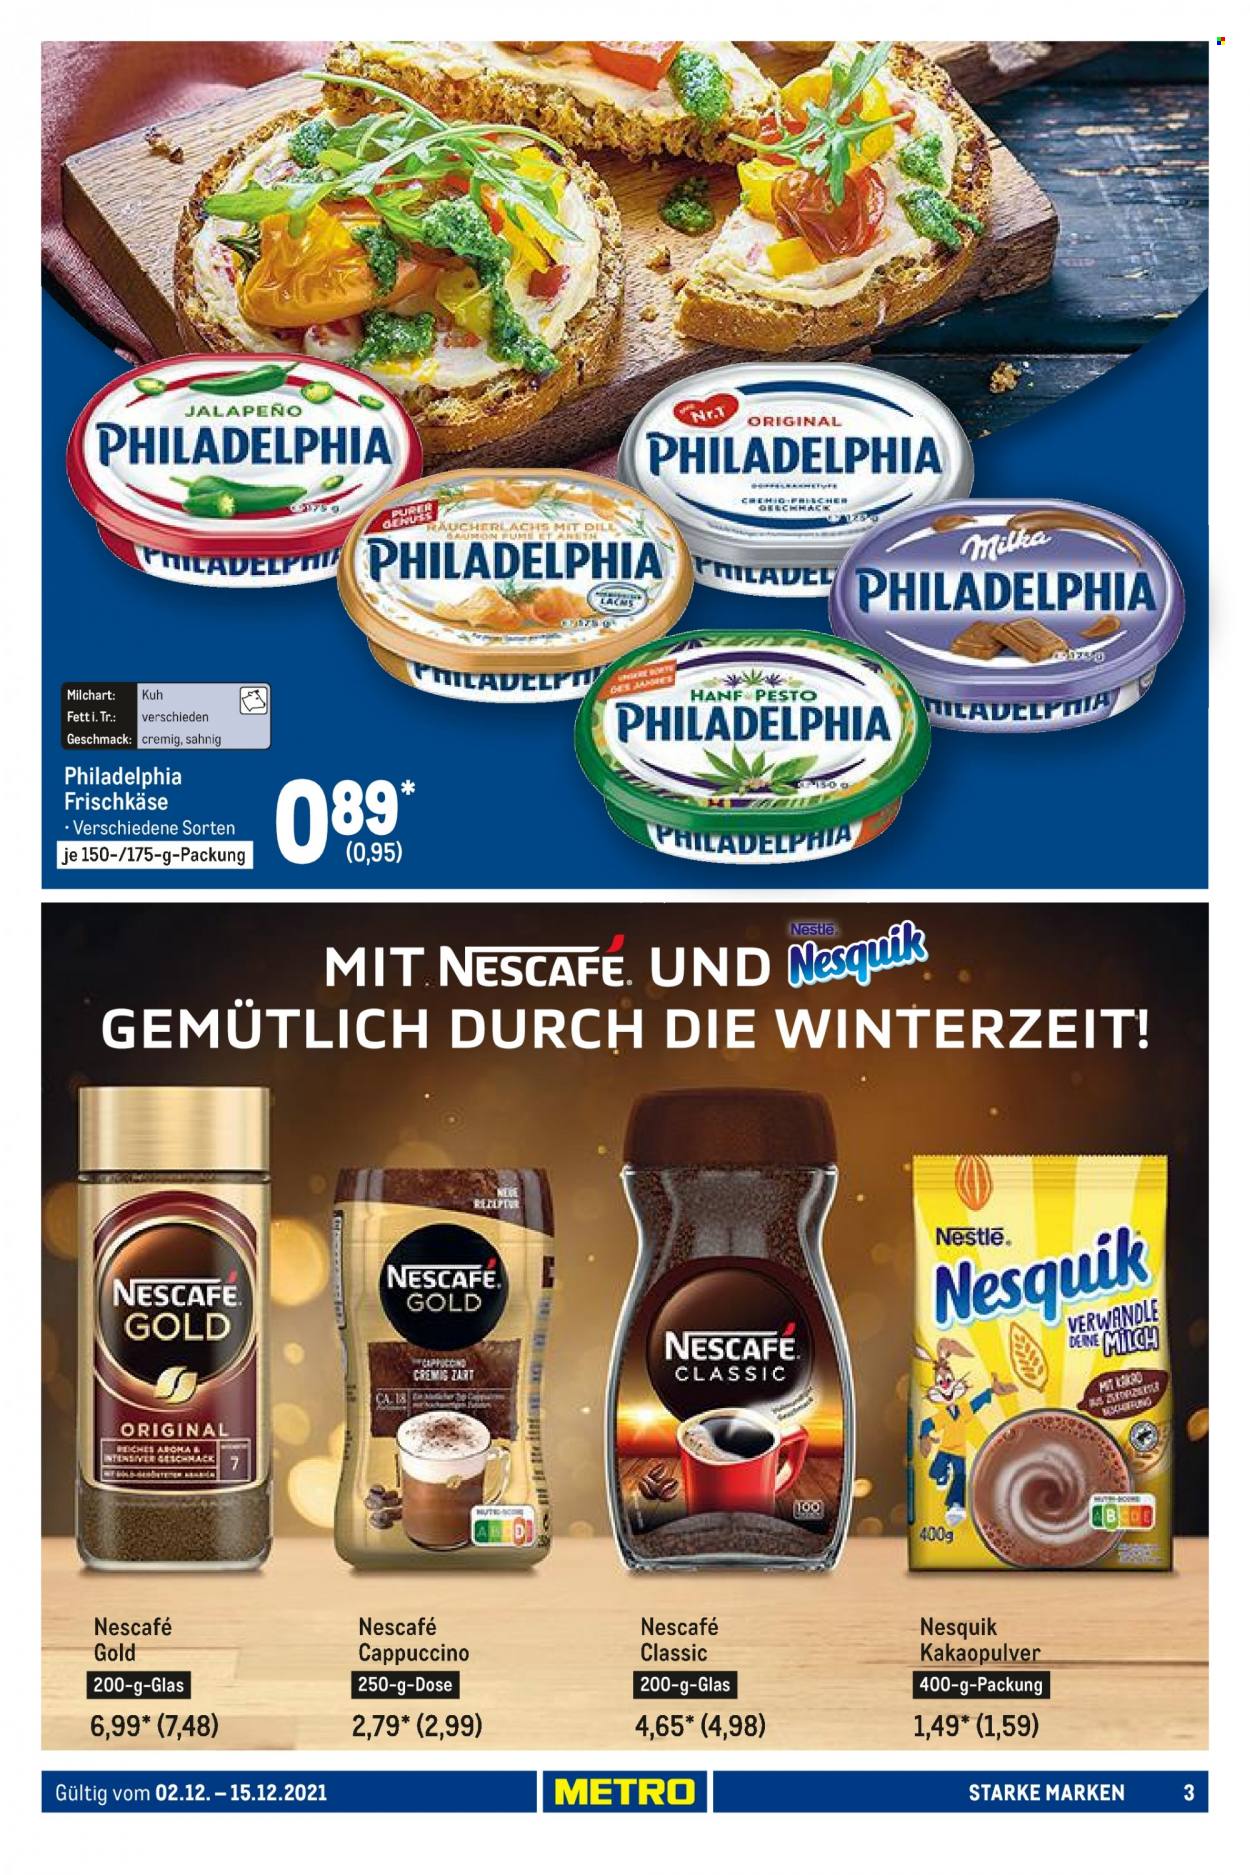 thumbnail - Prospekte Metro - 2.12.2021 - 15.12.2021 - Produkte in Aktion - Käse, Philadelphia, Frischkäse, Milka, Nesquik, Milch, Nestlé, Pesto, Kaffee, Nescafé Gold, Nescafé. Seite 3.